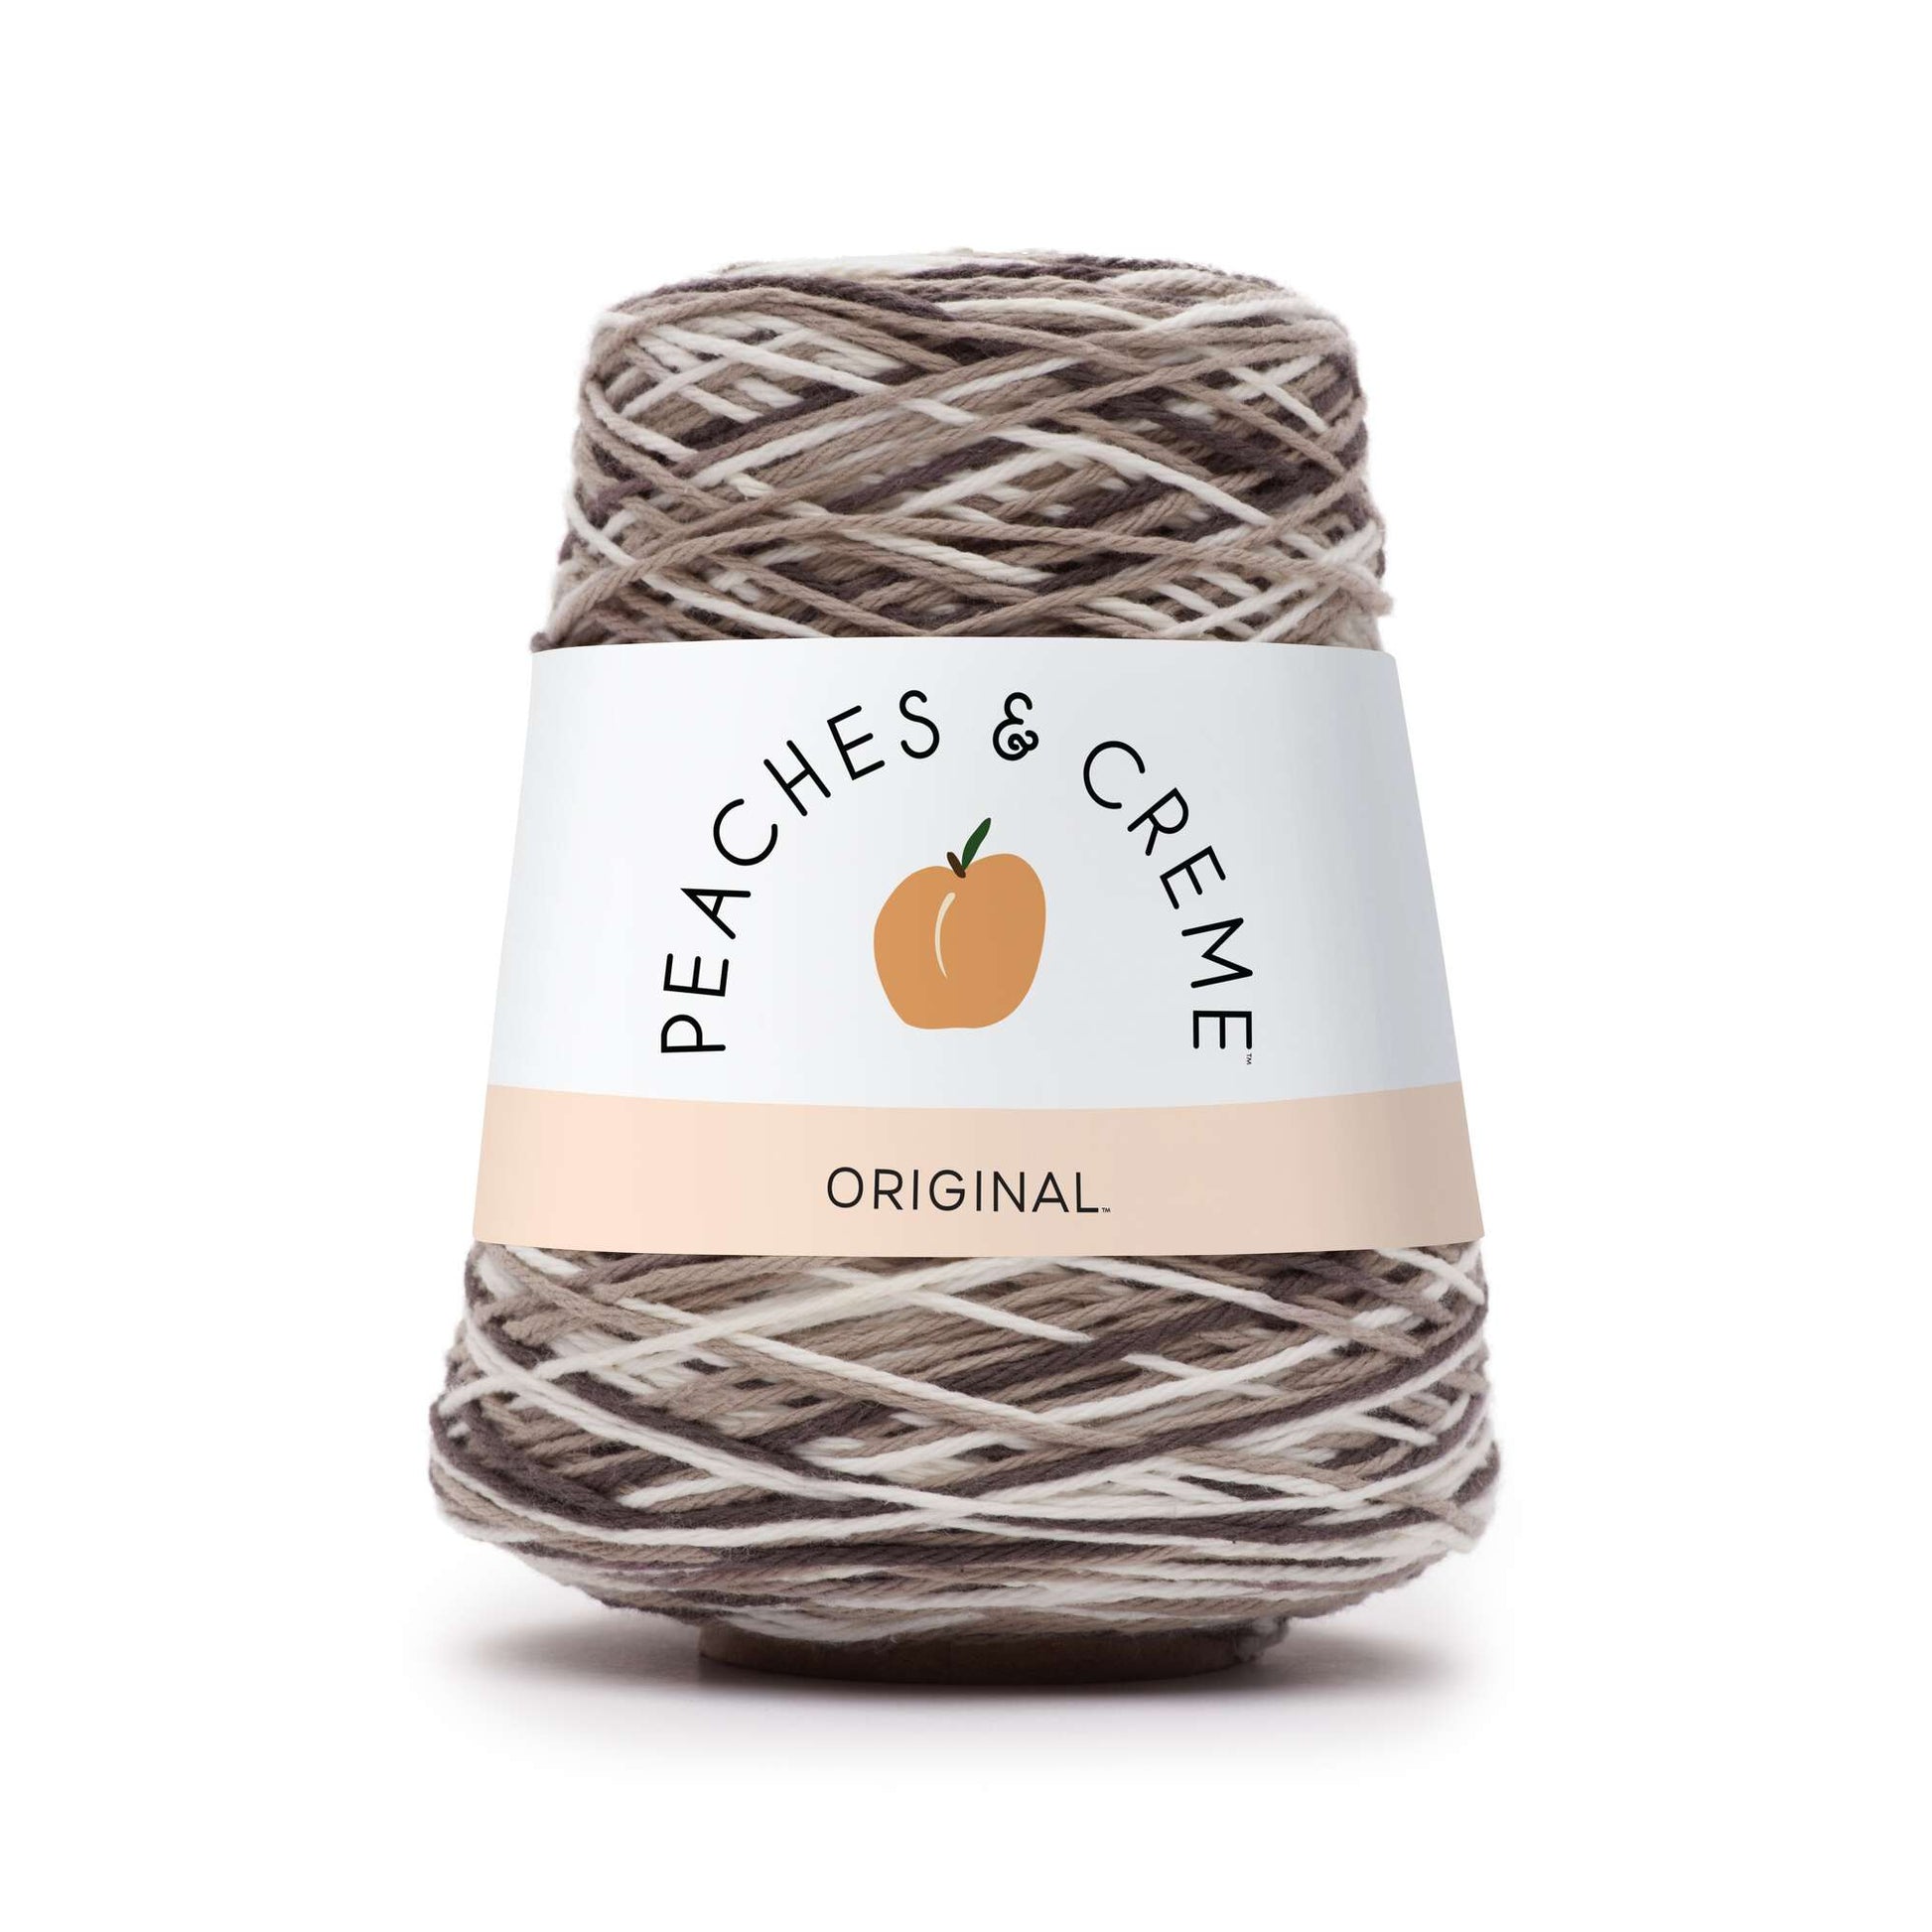 Peaches & Crème Cones Yarn